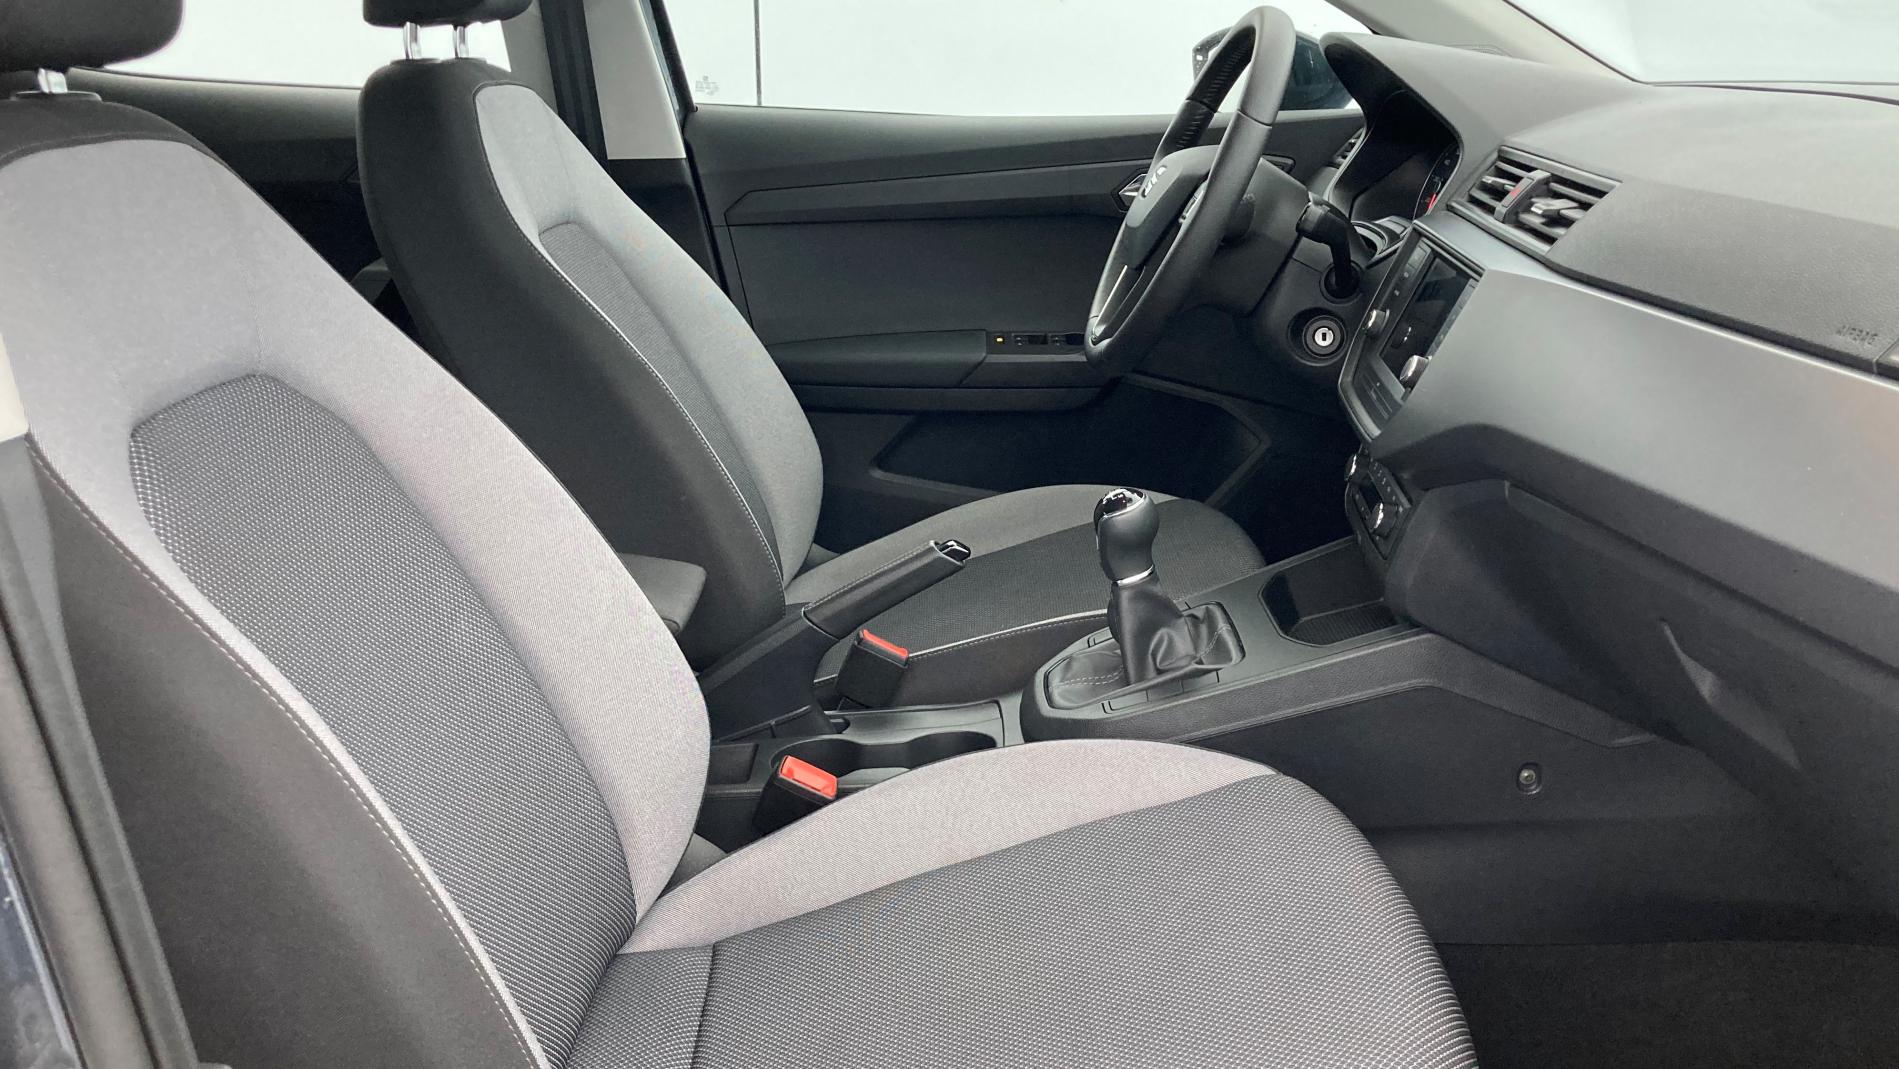 seat ibiza style 1.0 MPI 80 2019 gris magnetic 12